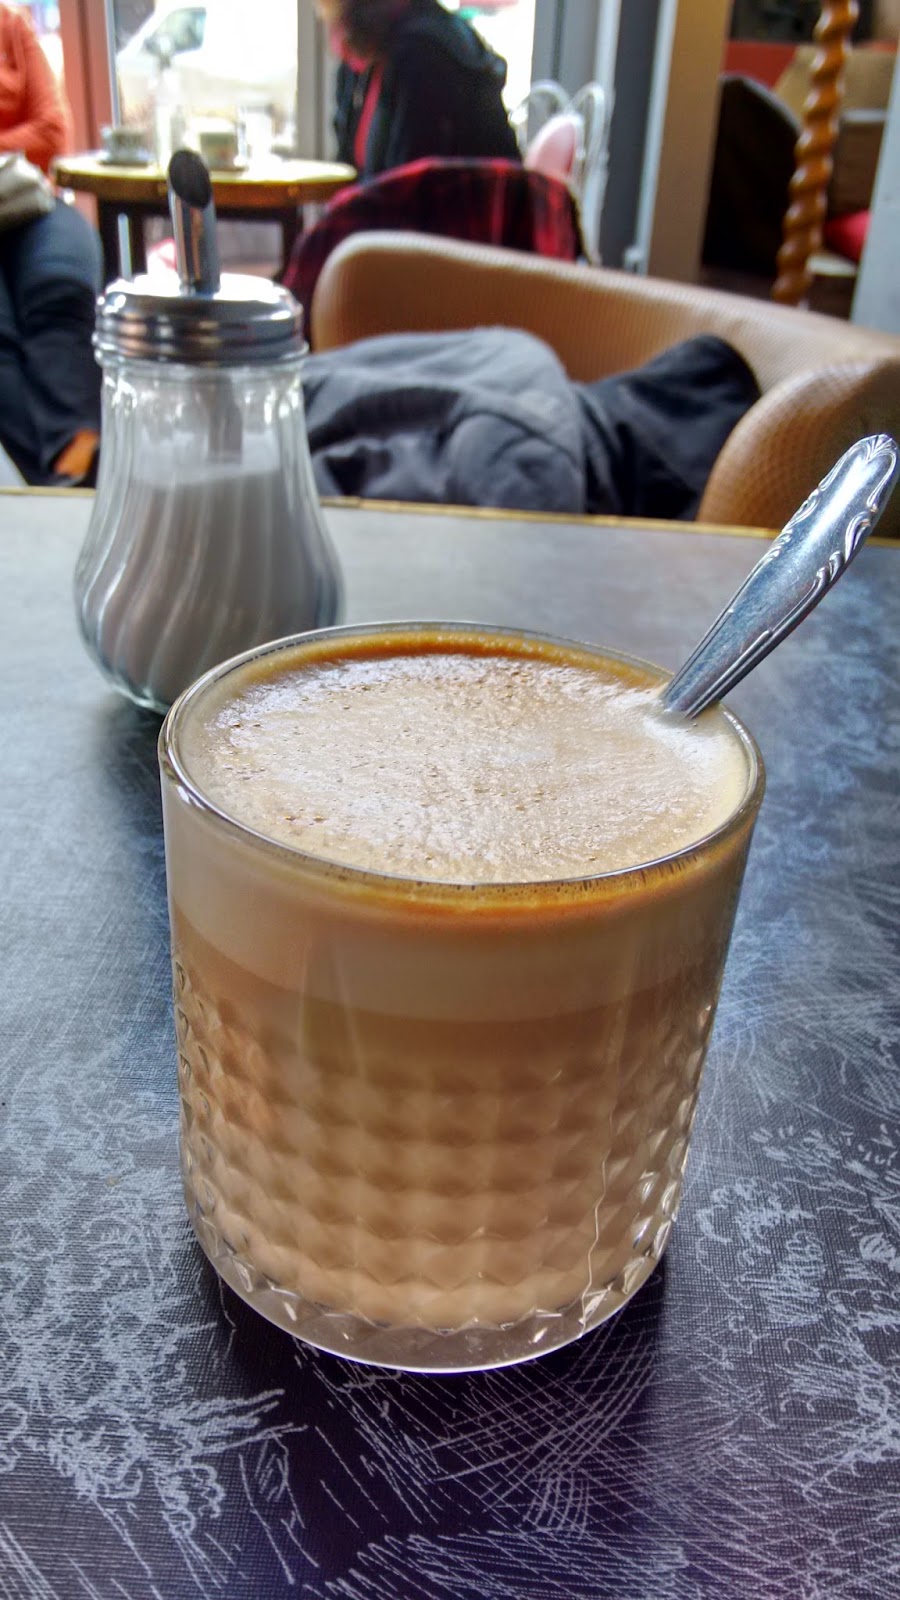 Kaffee im Glas